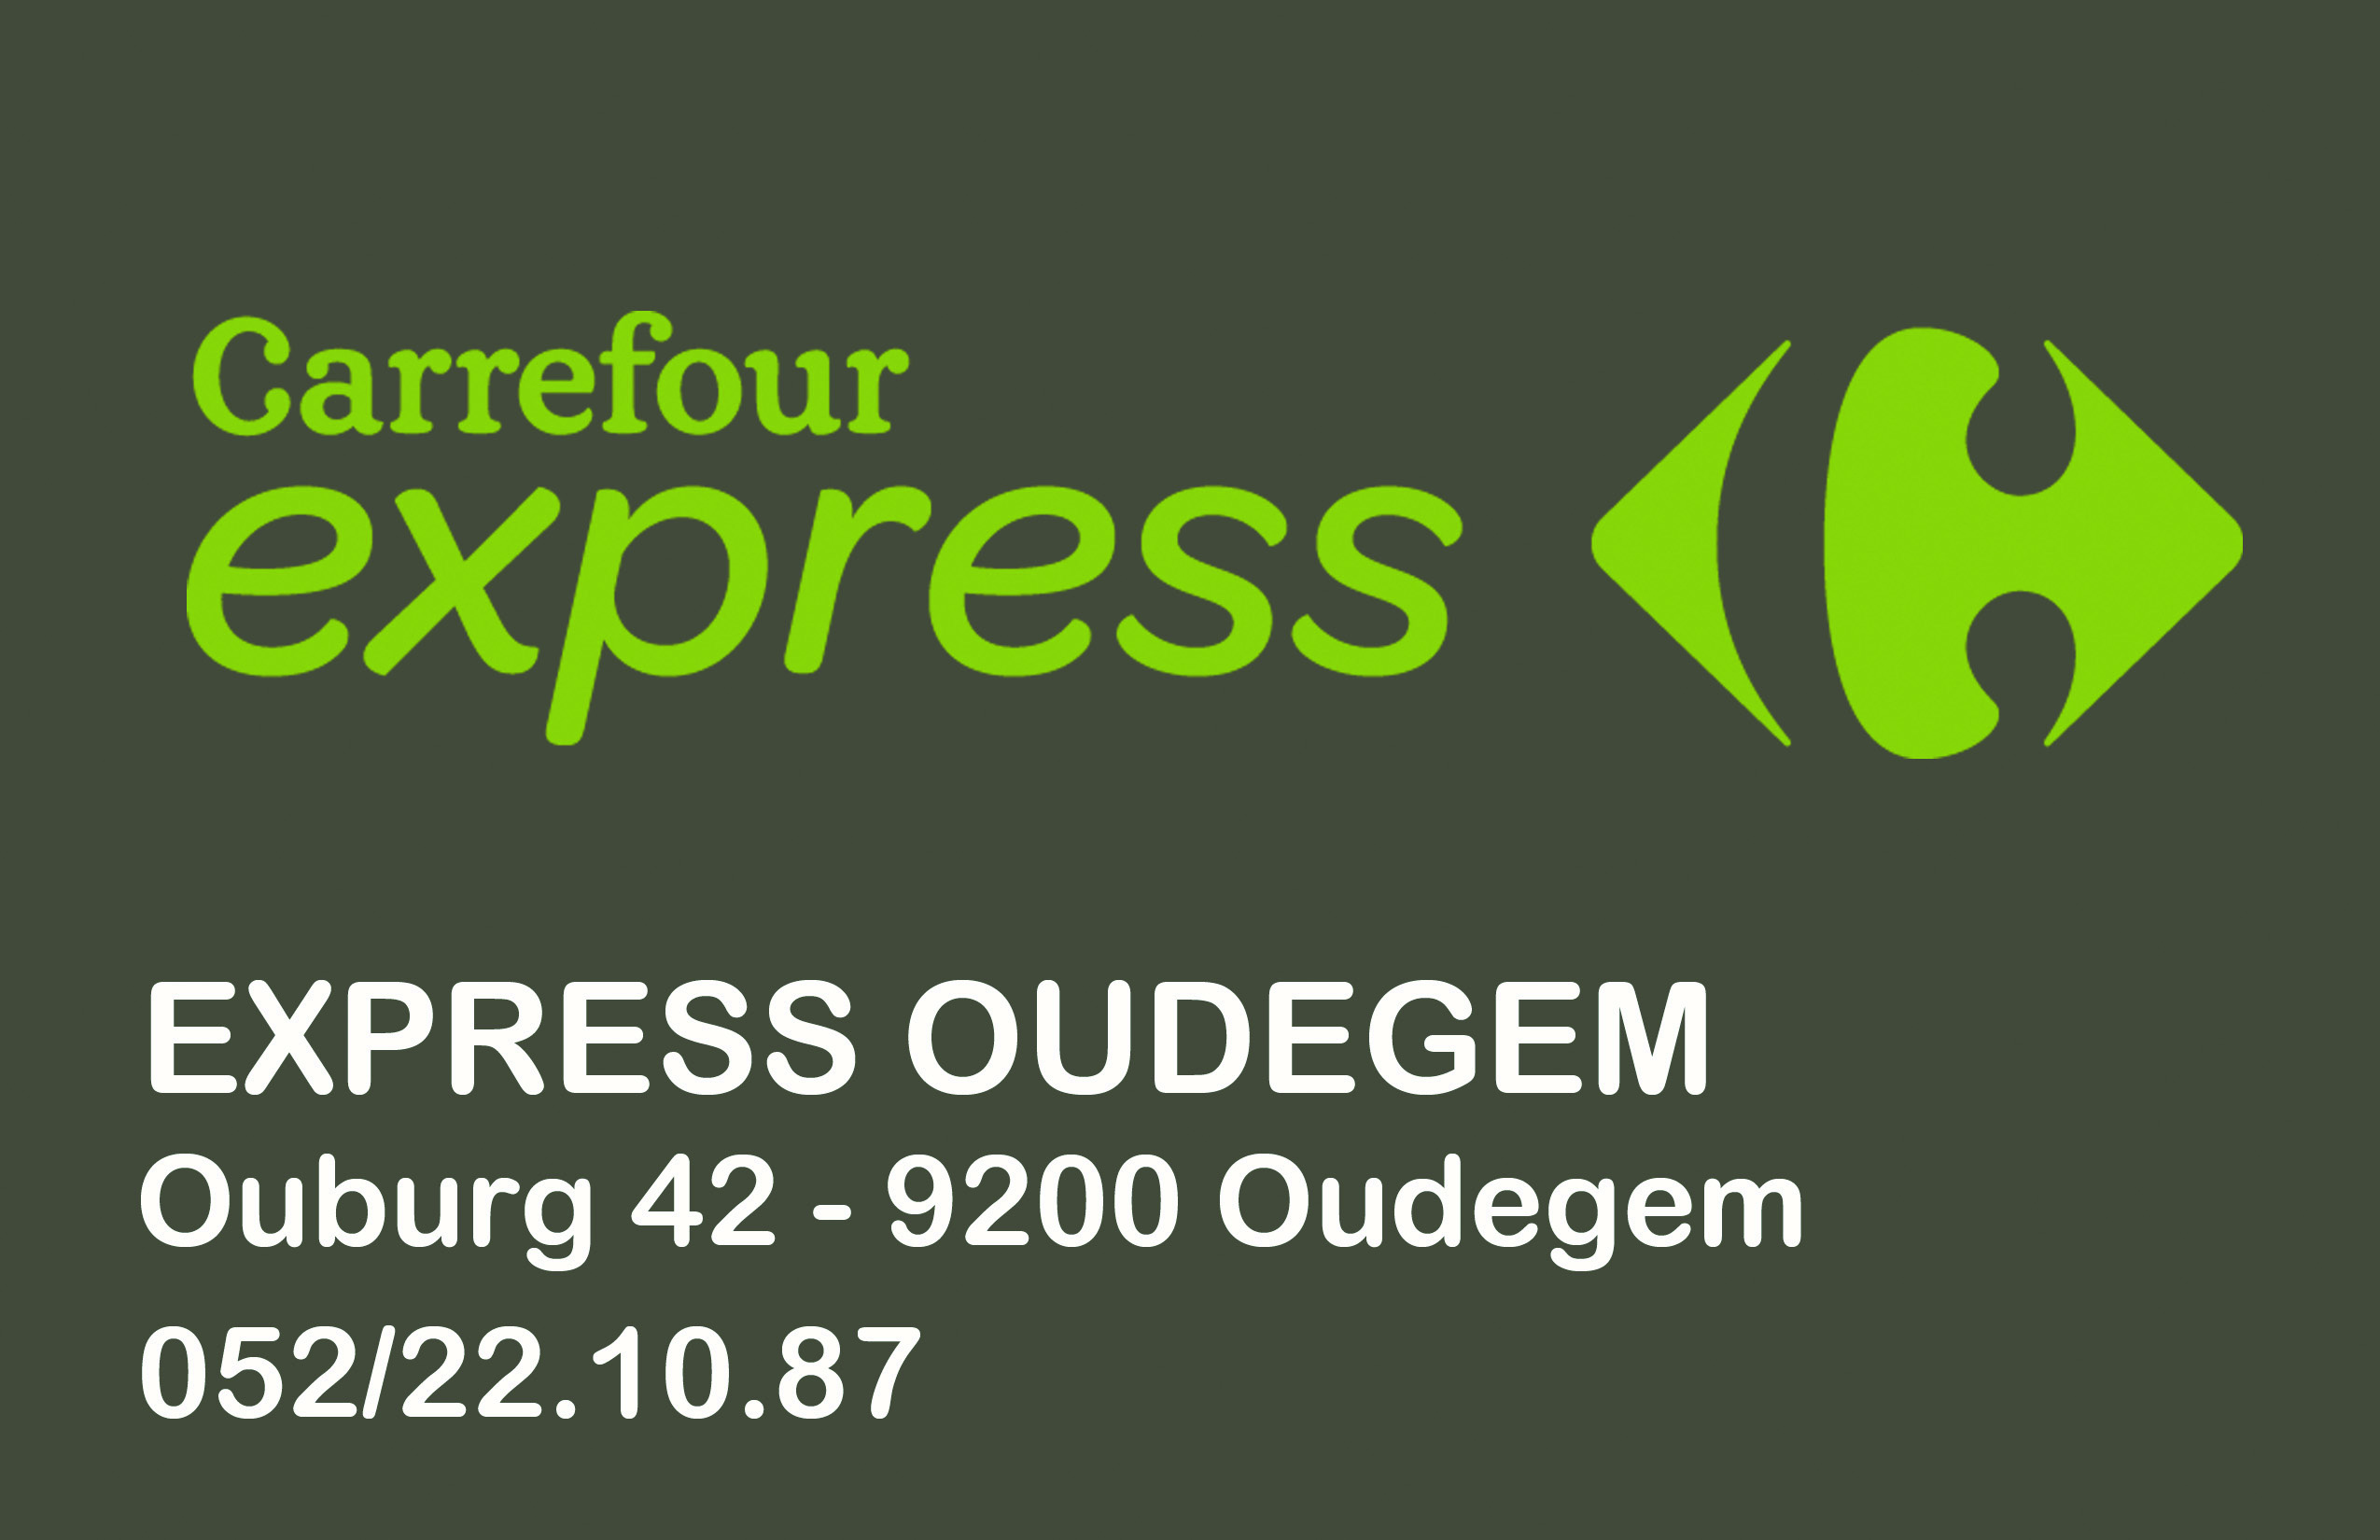 Carrefour Express Oudegem